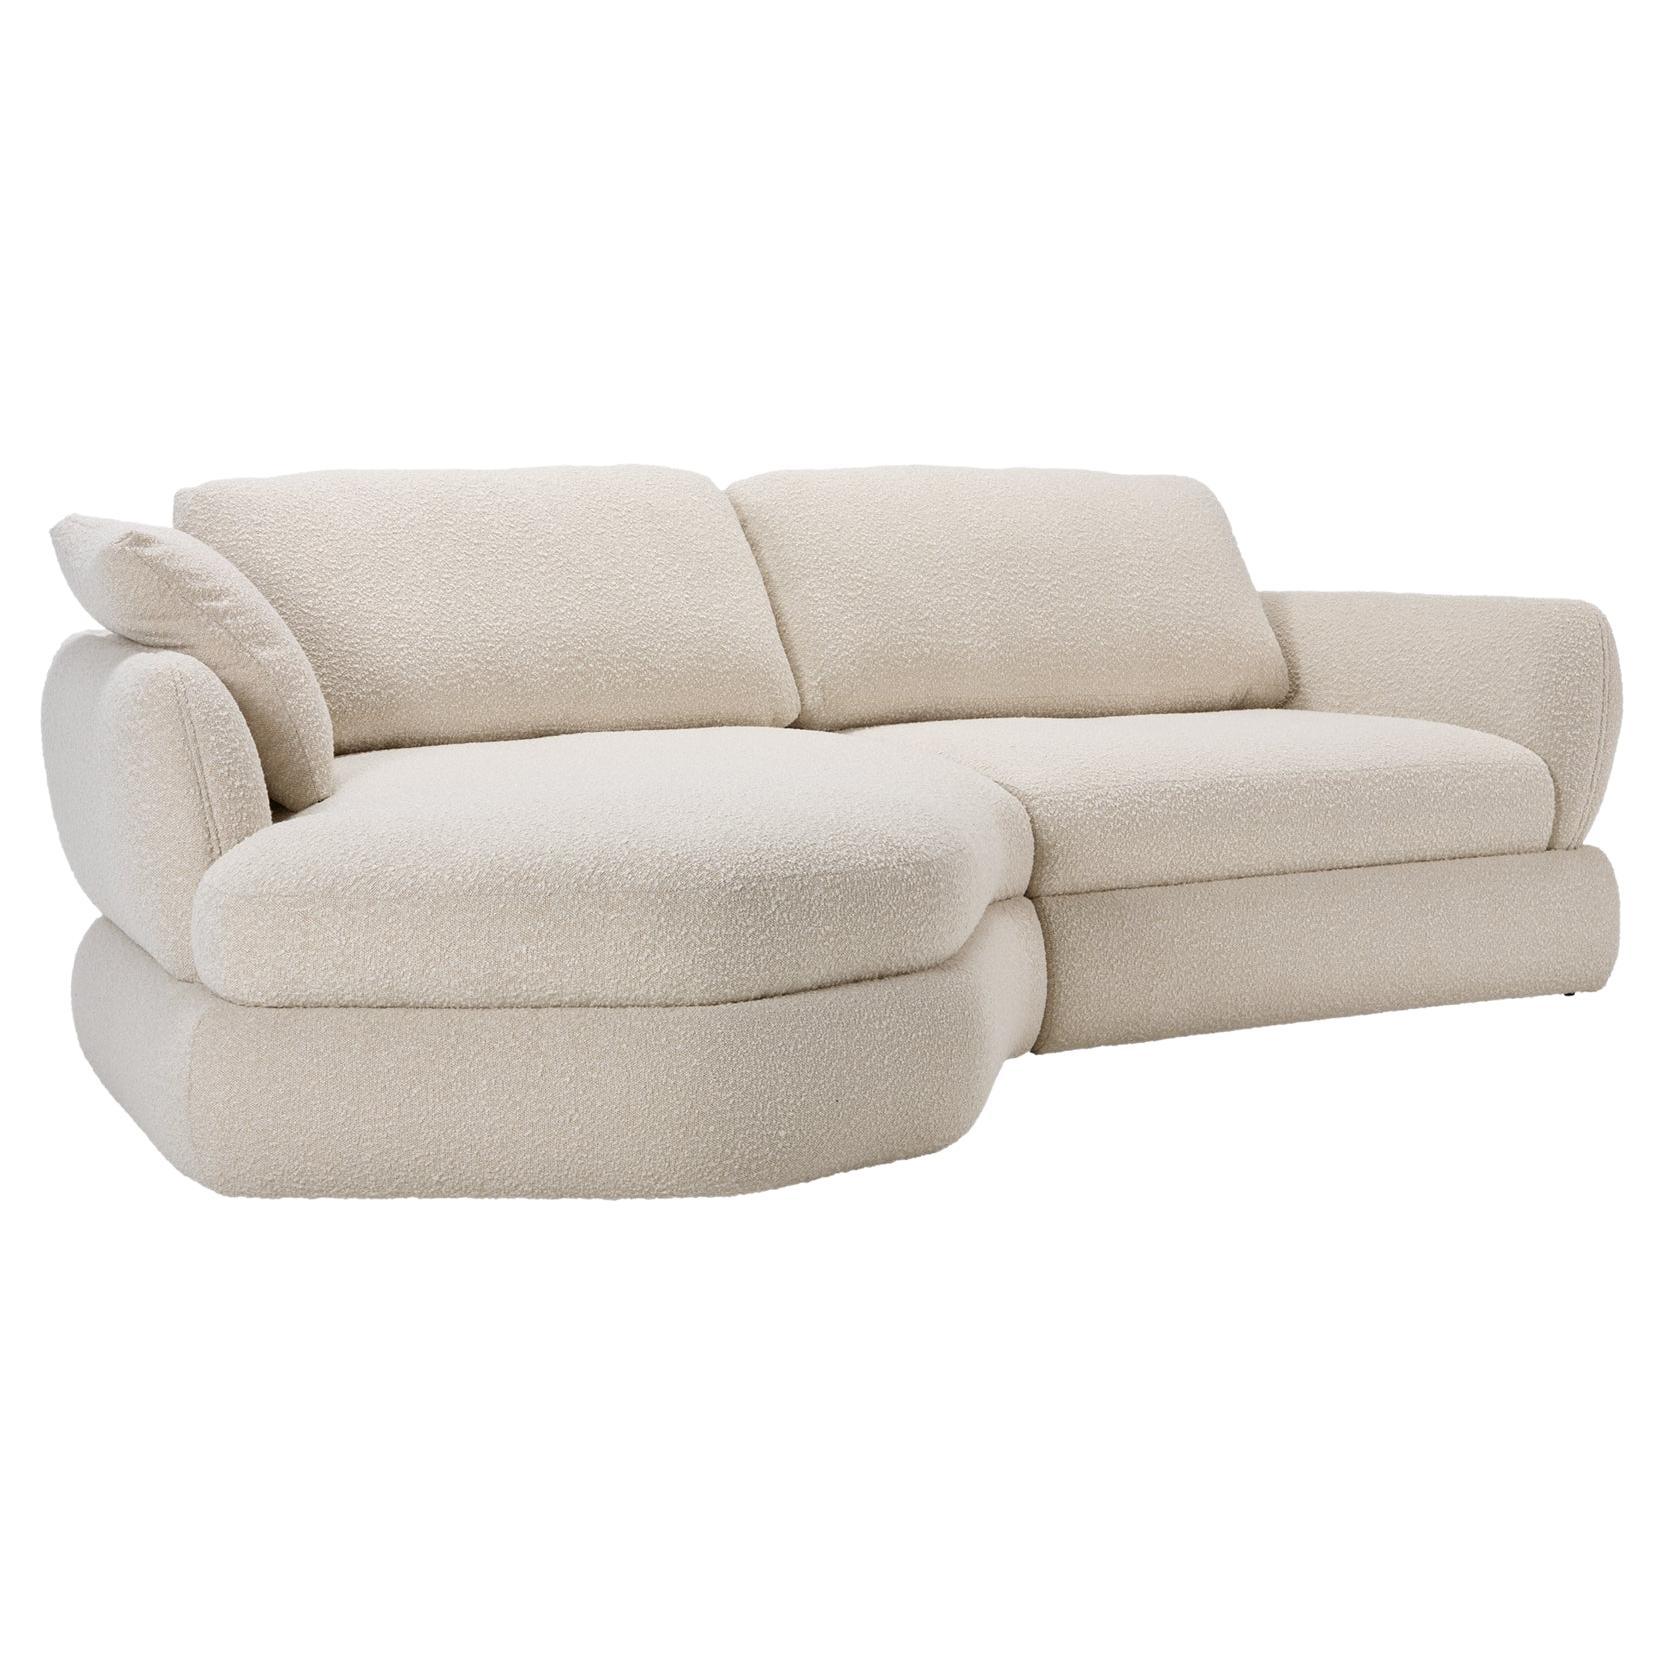 BELLAGIO Chaise-Longue sofa in white boucle